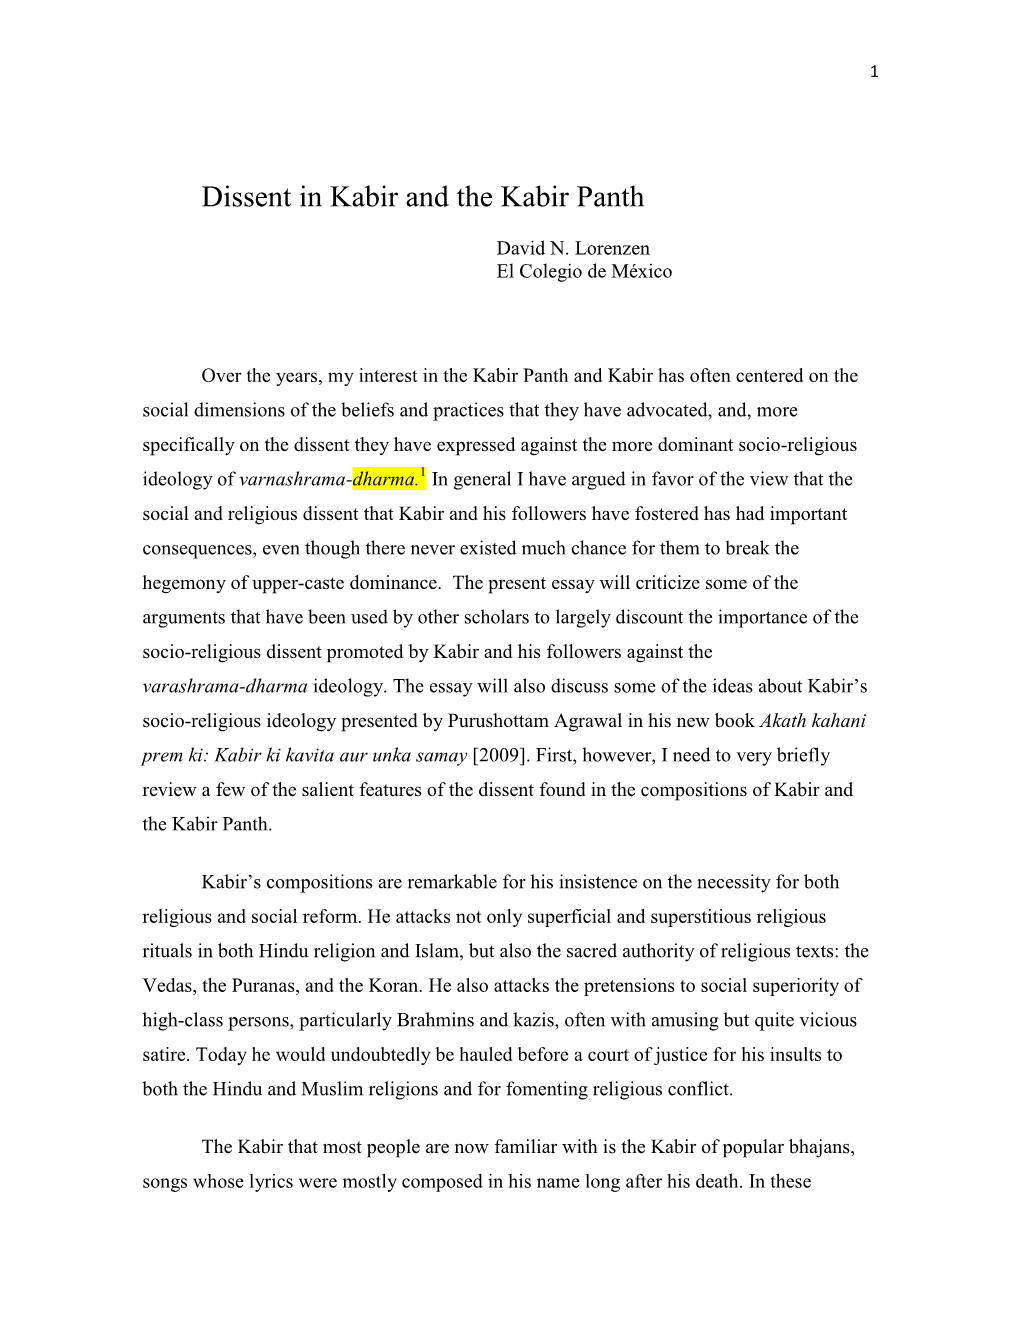 Dissent in Kabir and the Kabir Panth